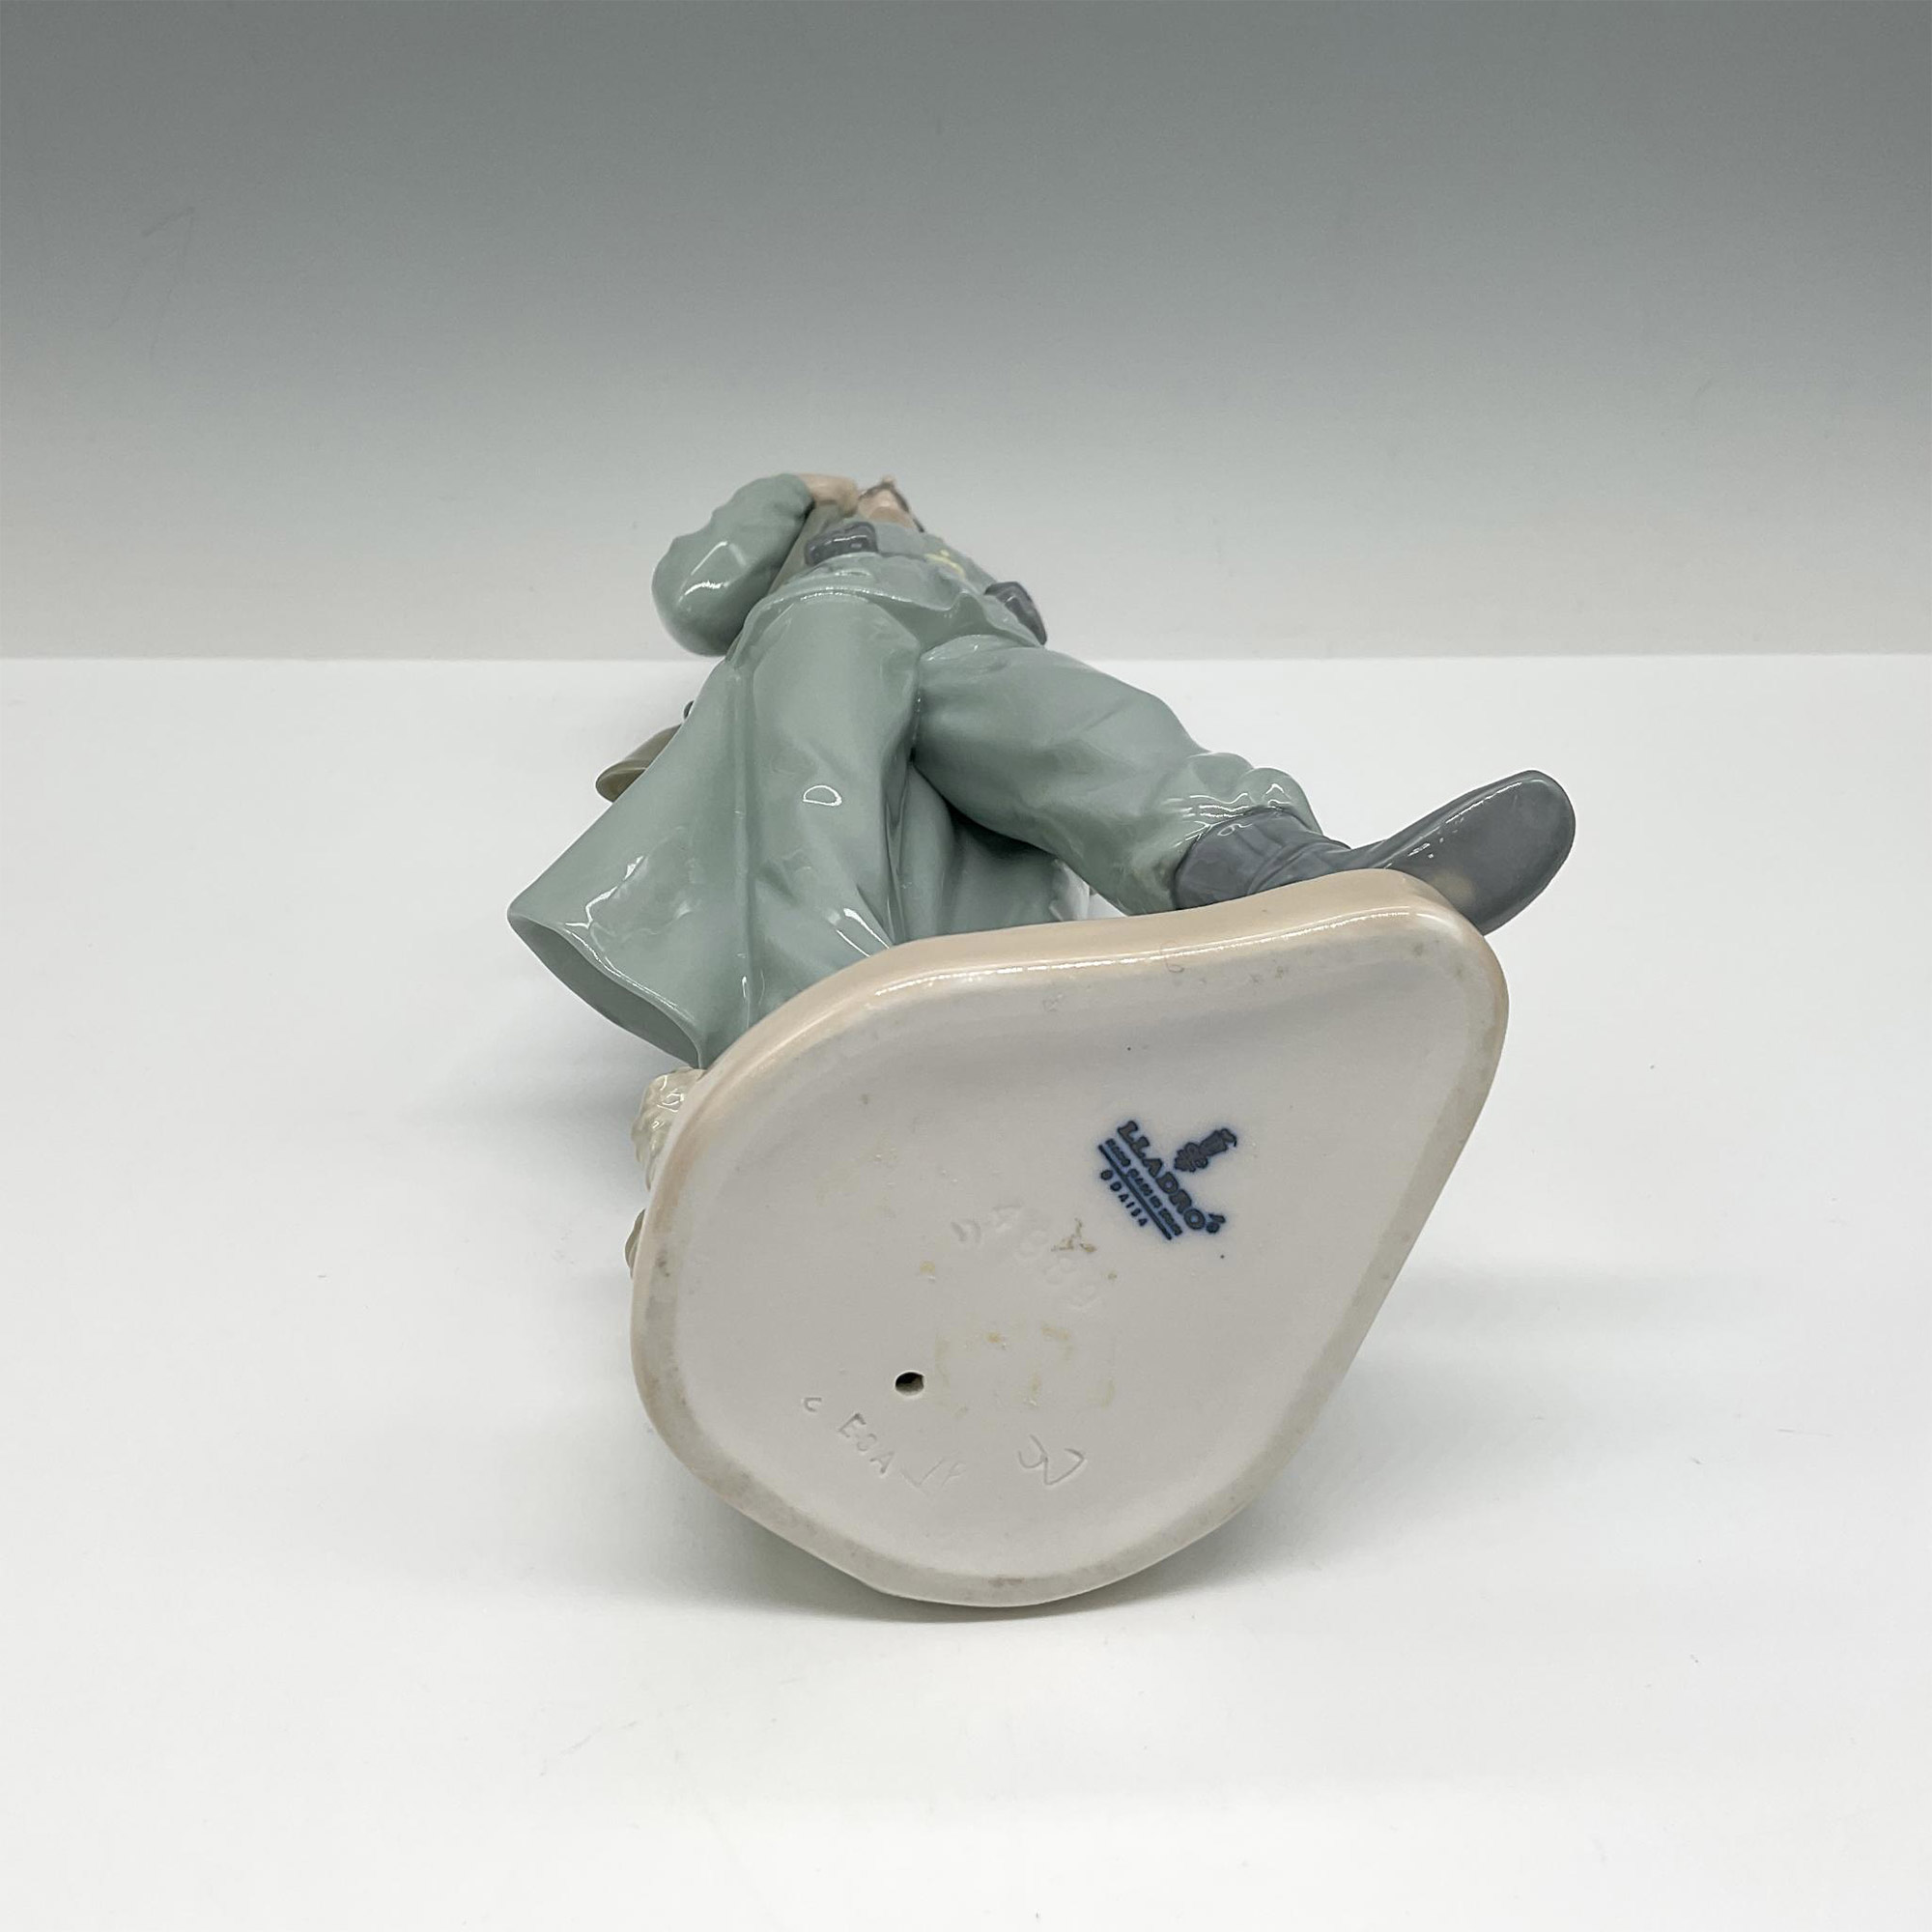 Spanish Policeman 1004889 - Lladro Porcelain Figurine - Image 4 of 4